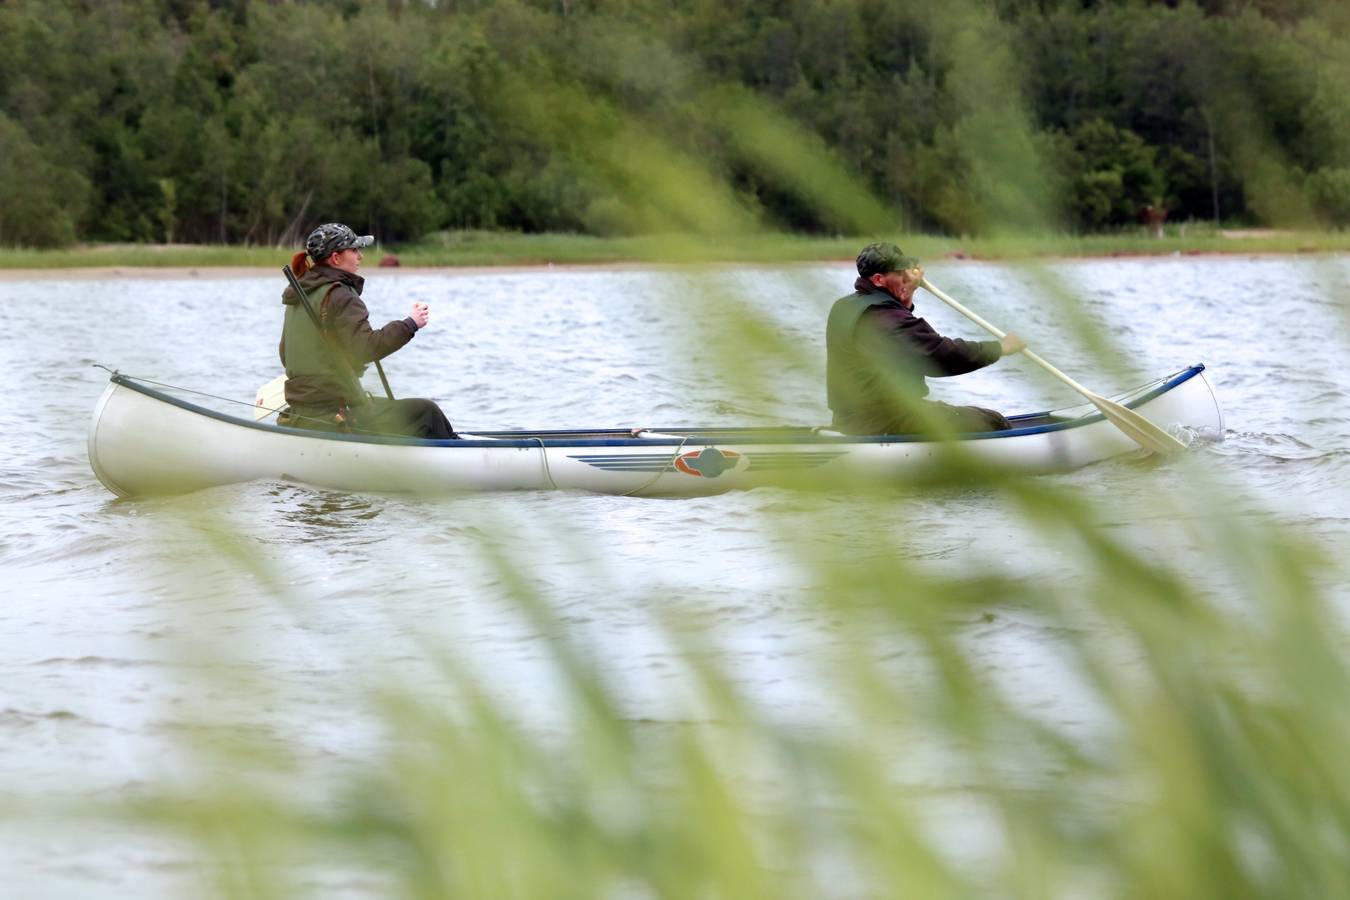 Lahnakoski IndiTour wooden canoe paddle